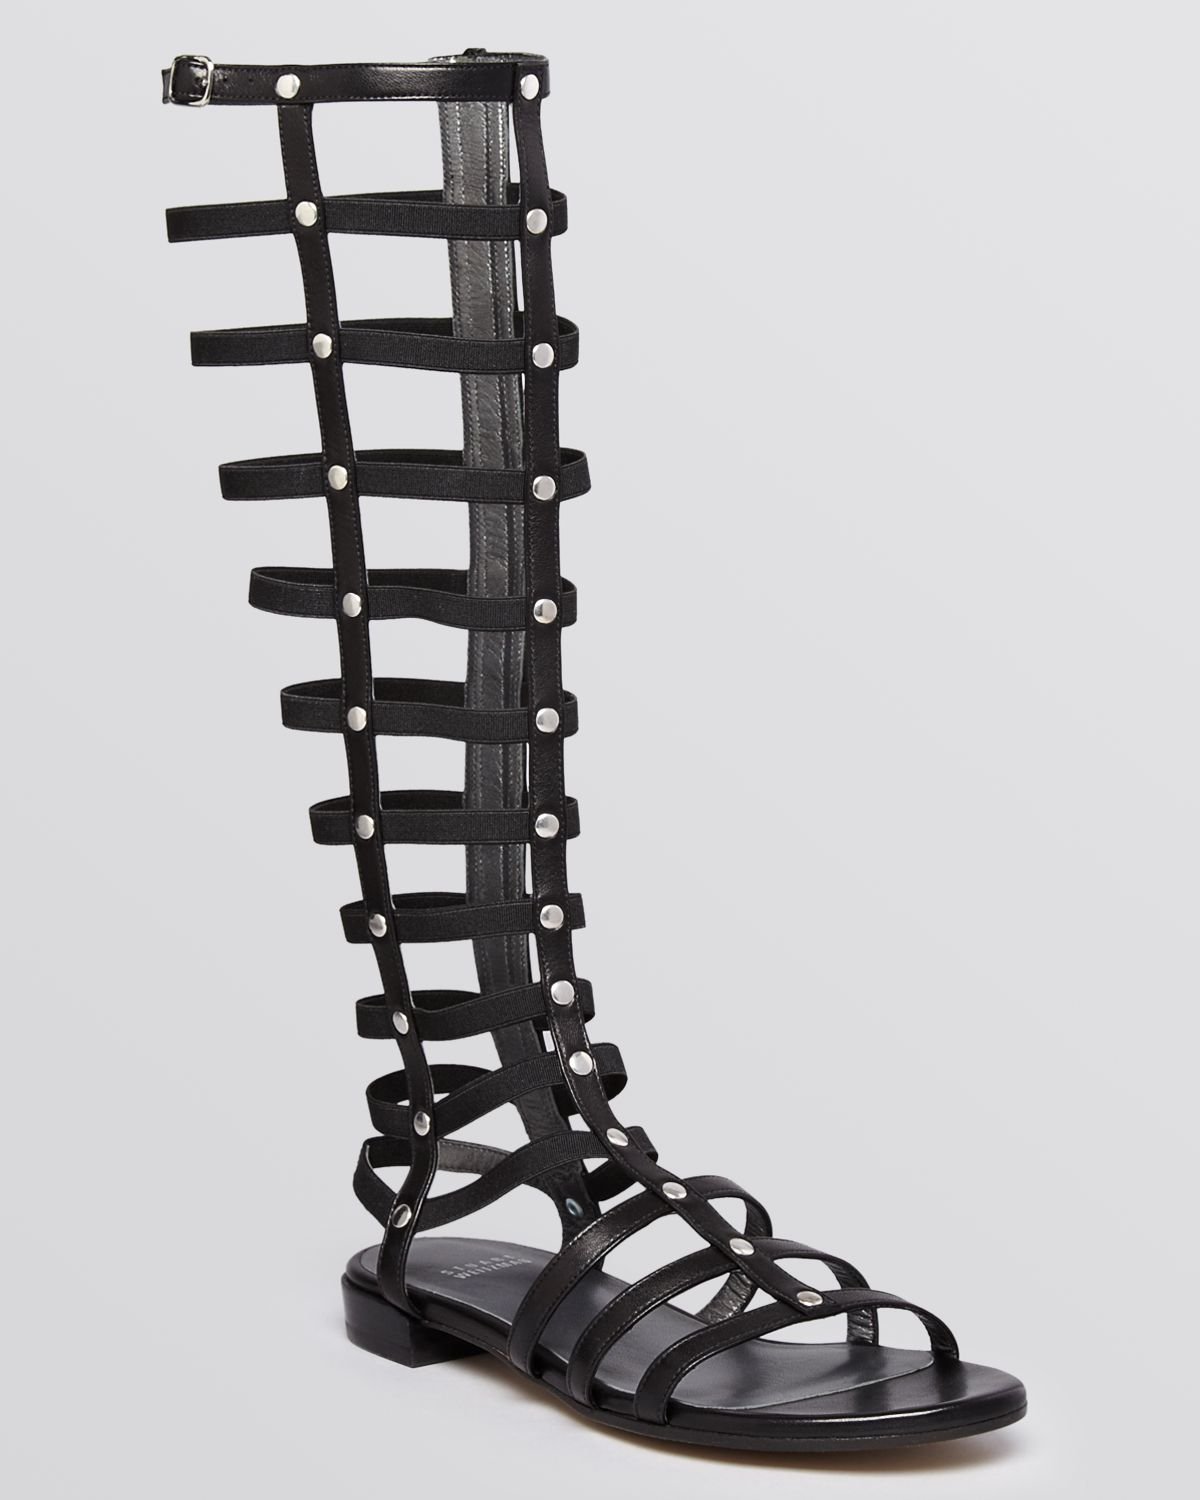 Stuart Weitzman Leather Gladiator Knee High Sandals in Black - Lyst